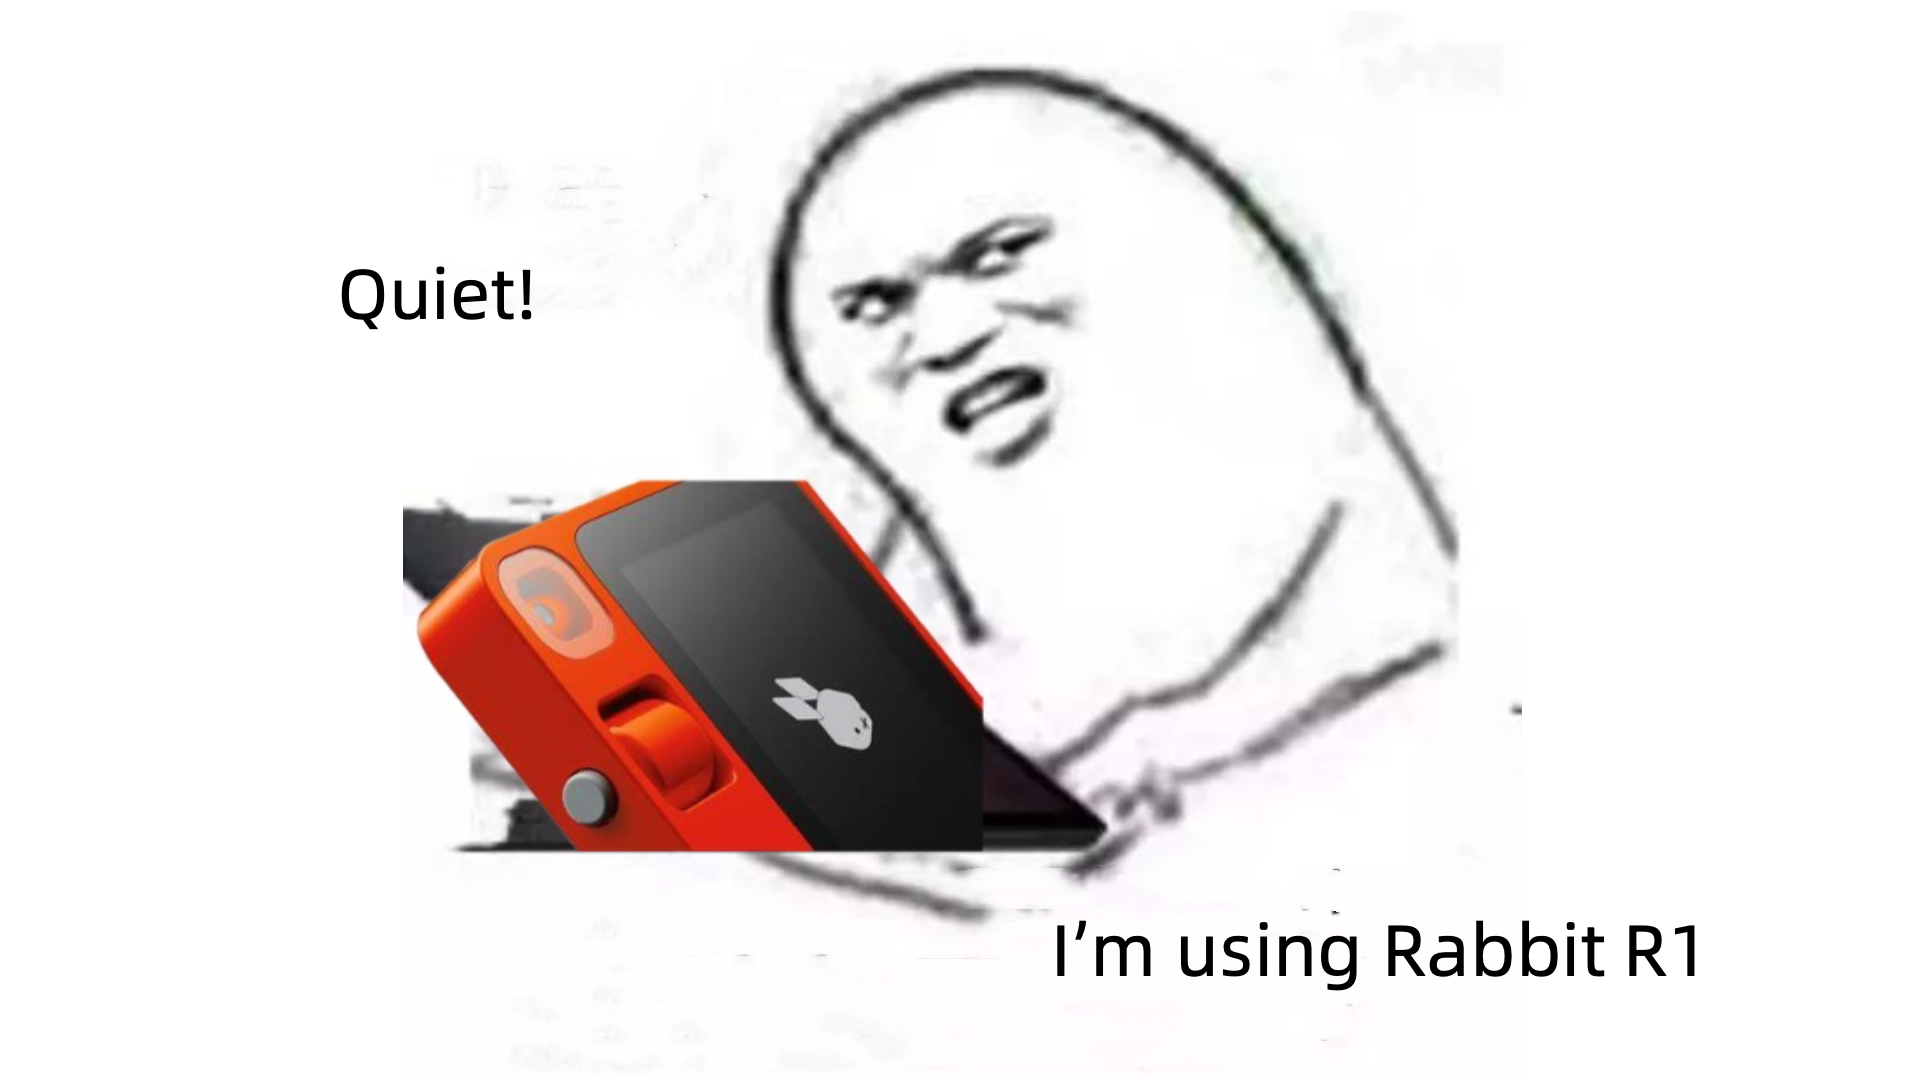 Rabbit R1 Meme